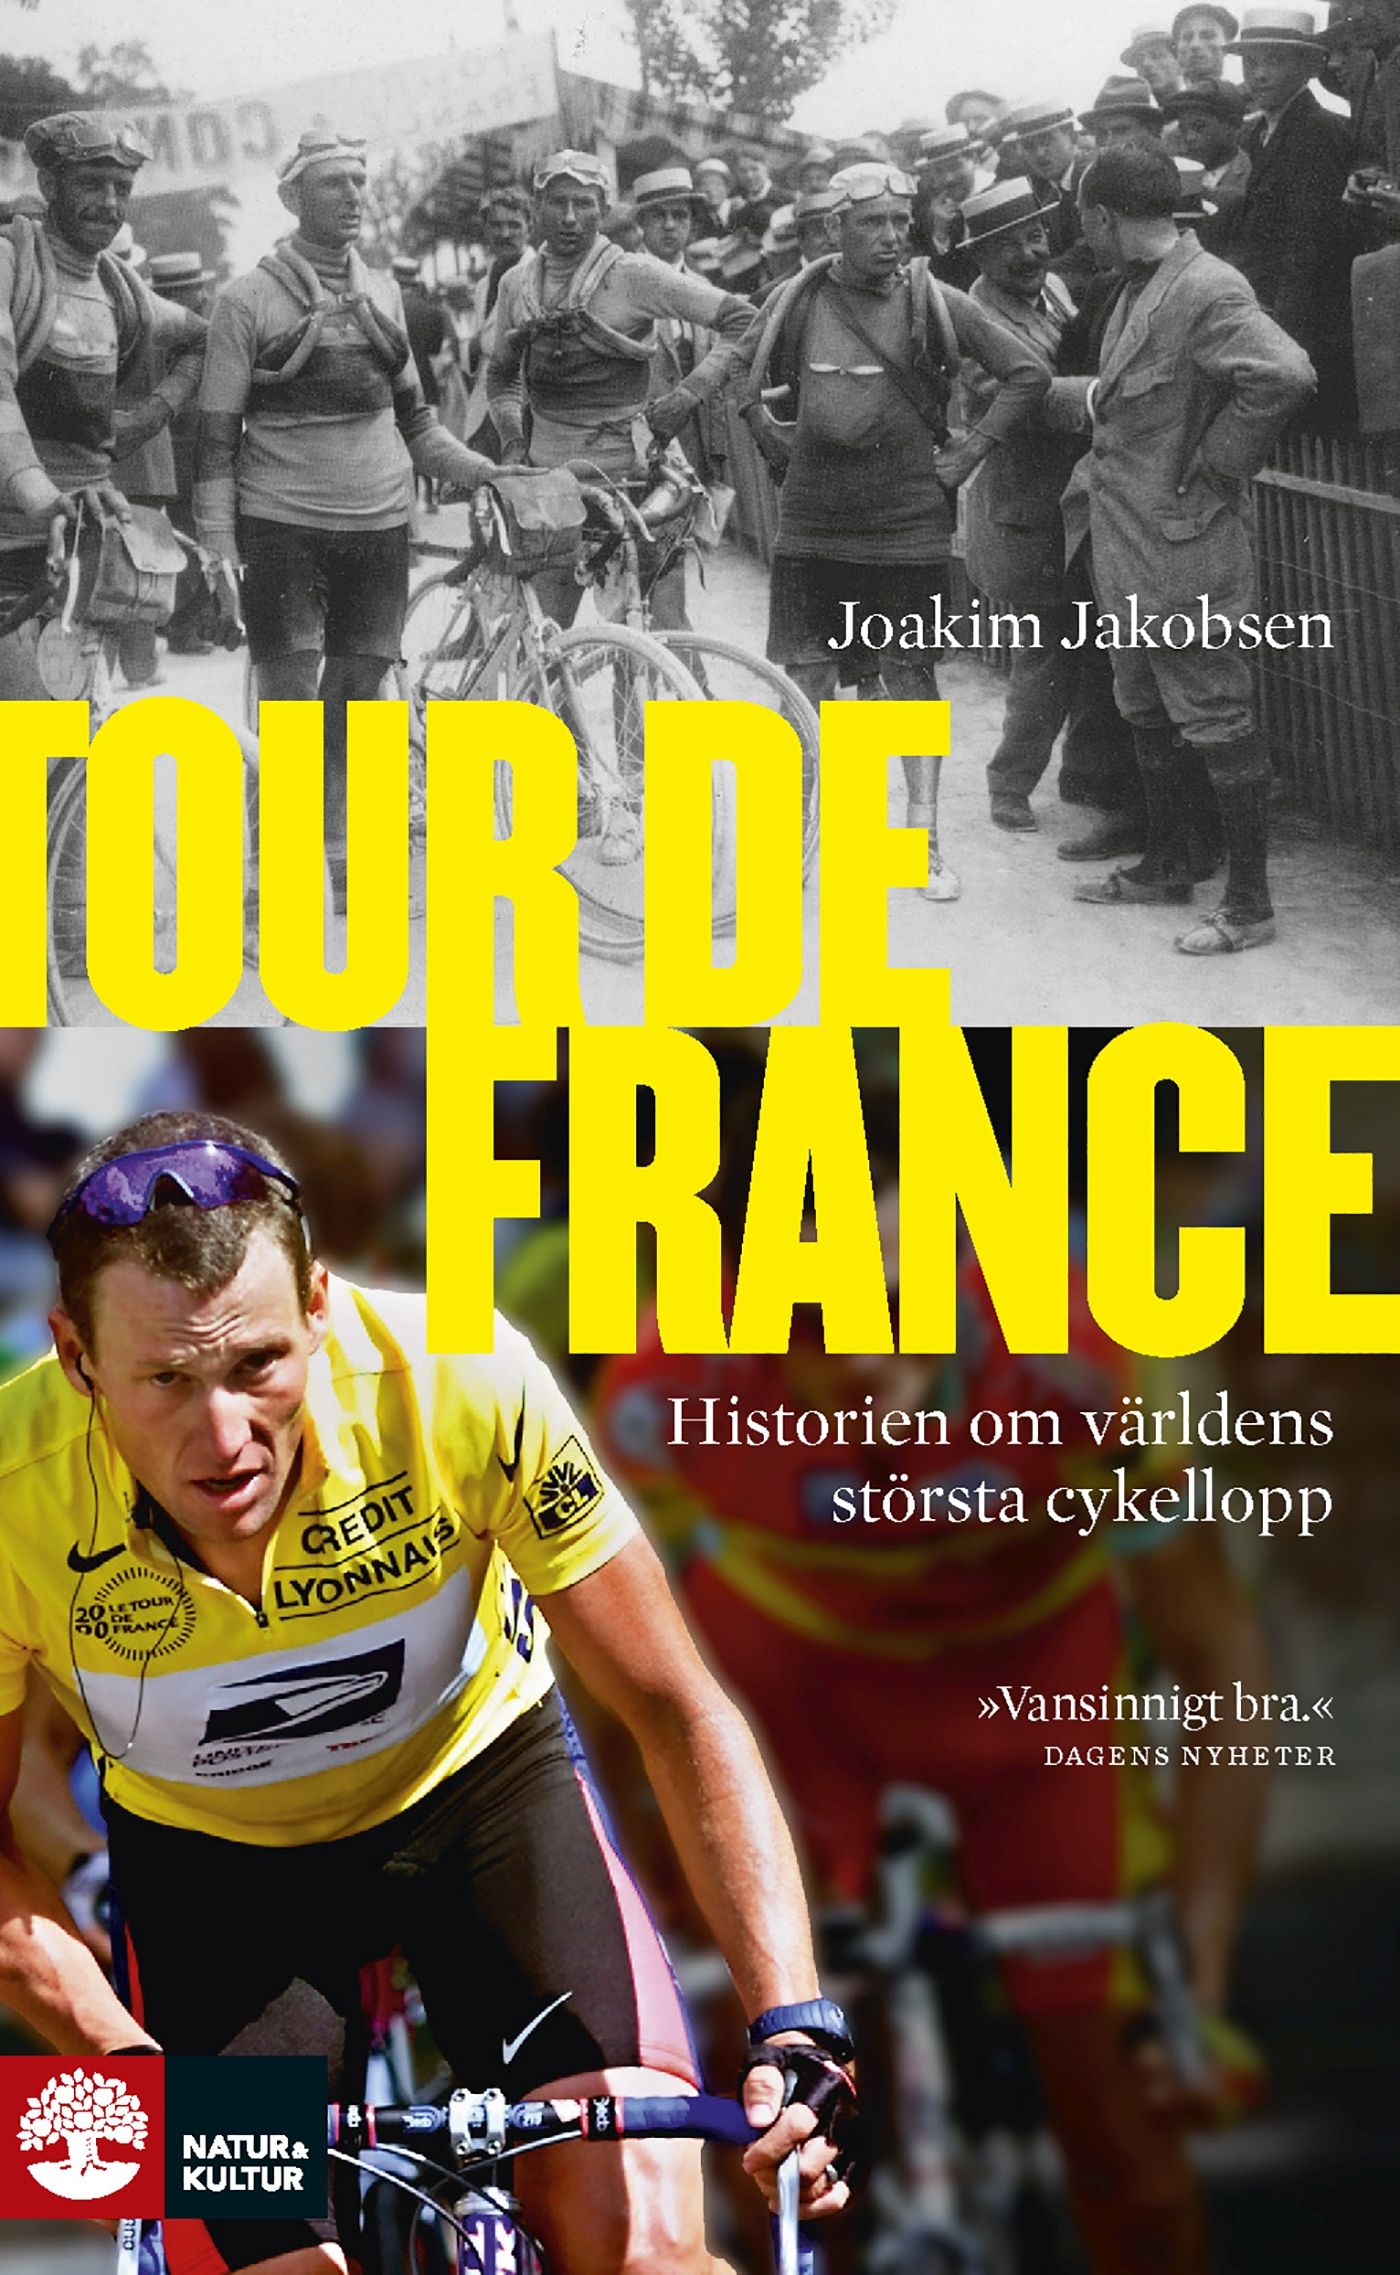 Tour de France, eBook by Joakim Jakobsen